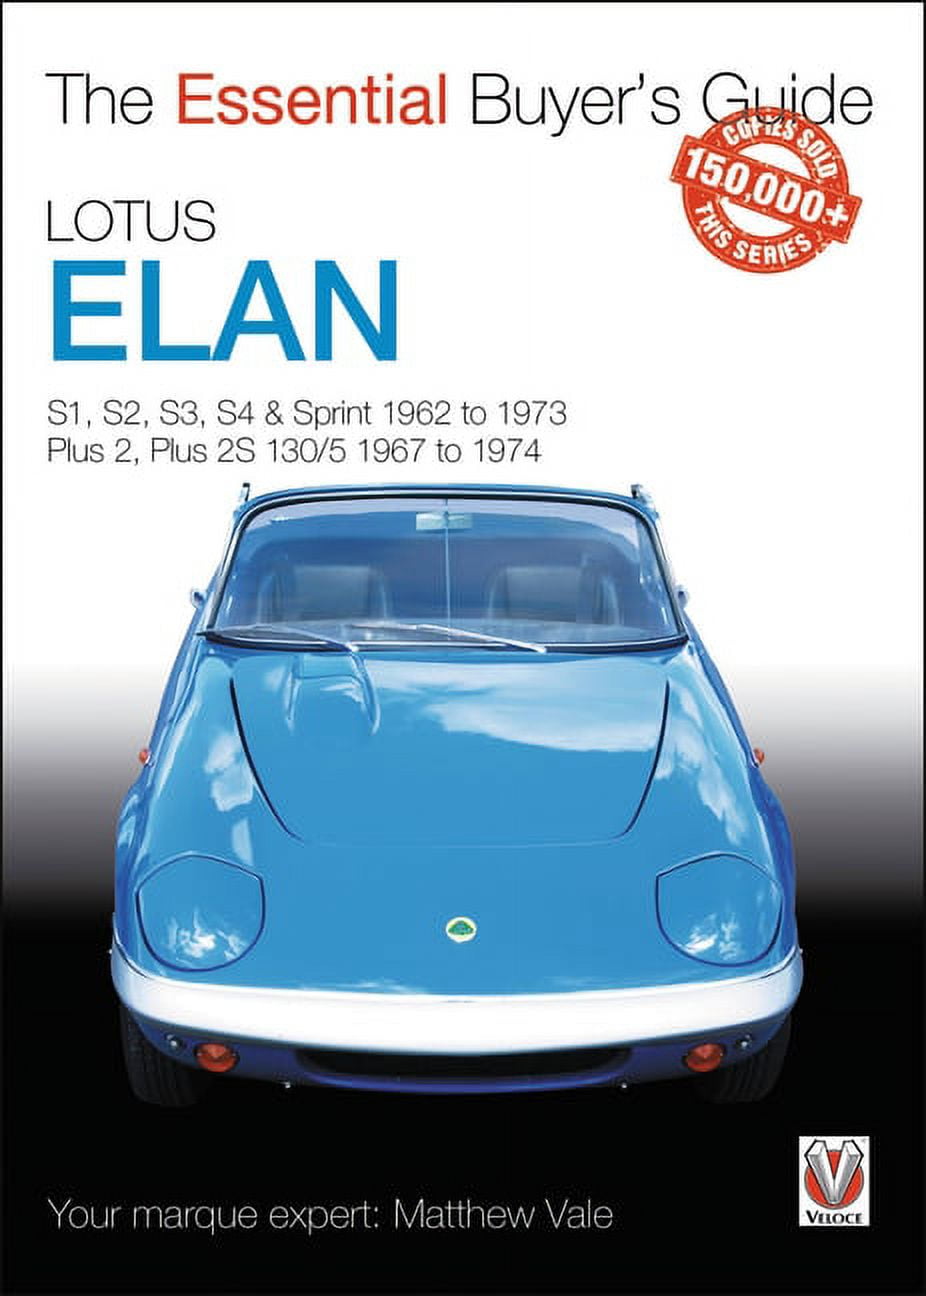 Blendstreifen FOR THE DRIVERS  Lotus Shop - Lotus Merchandise & Cars